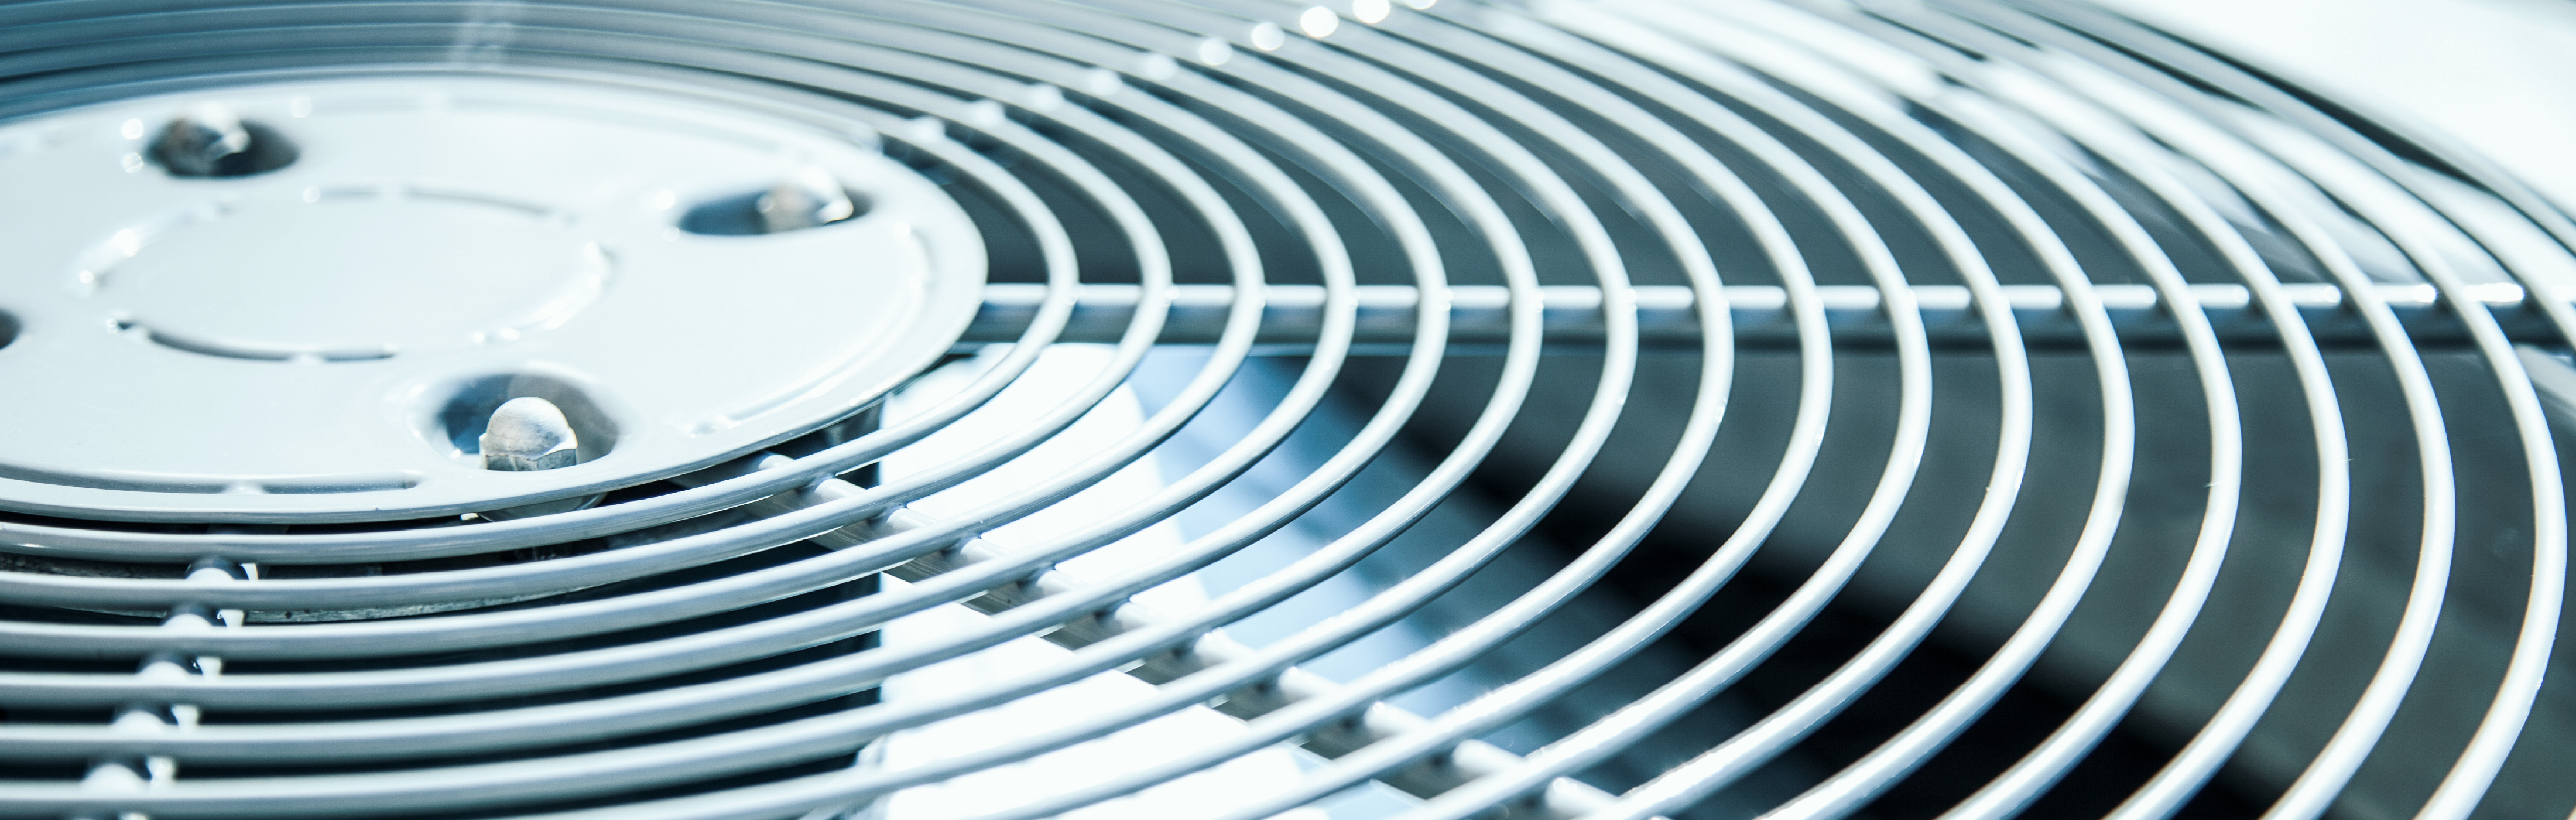 Close up image of AC air conditioner handler